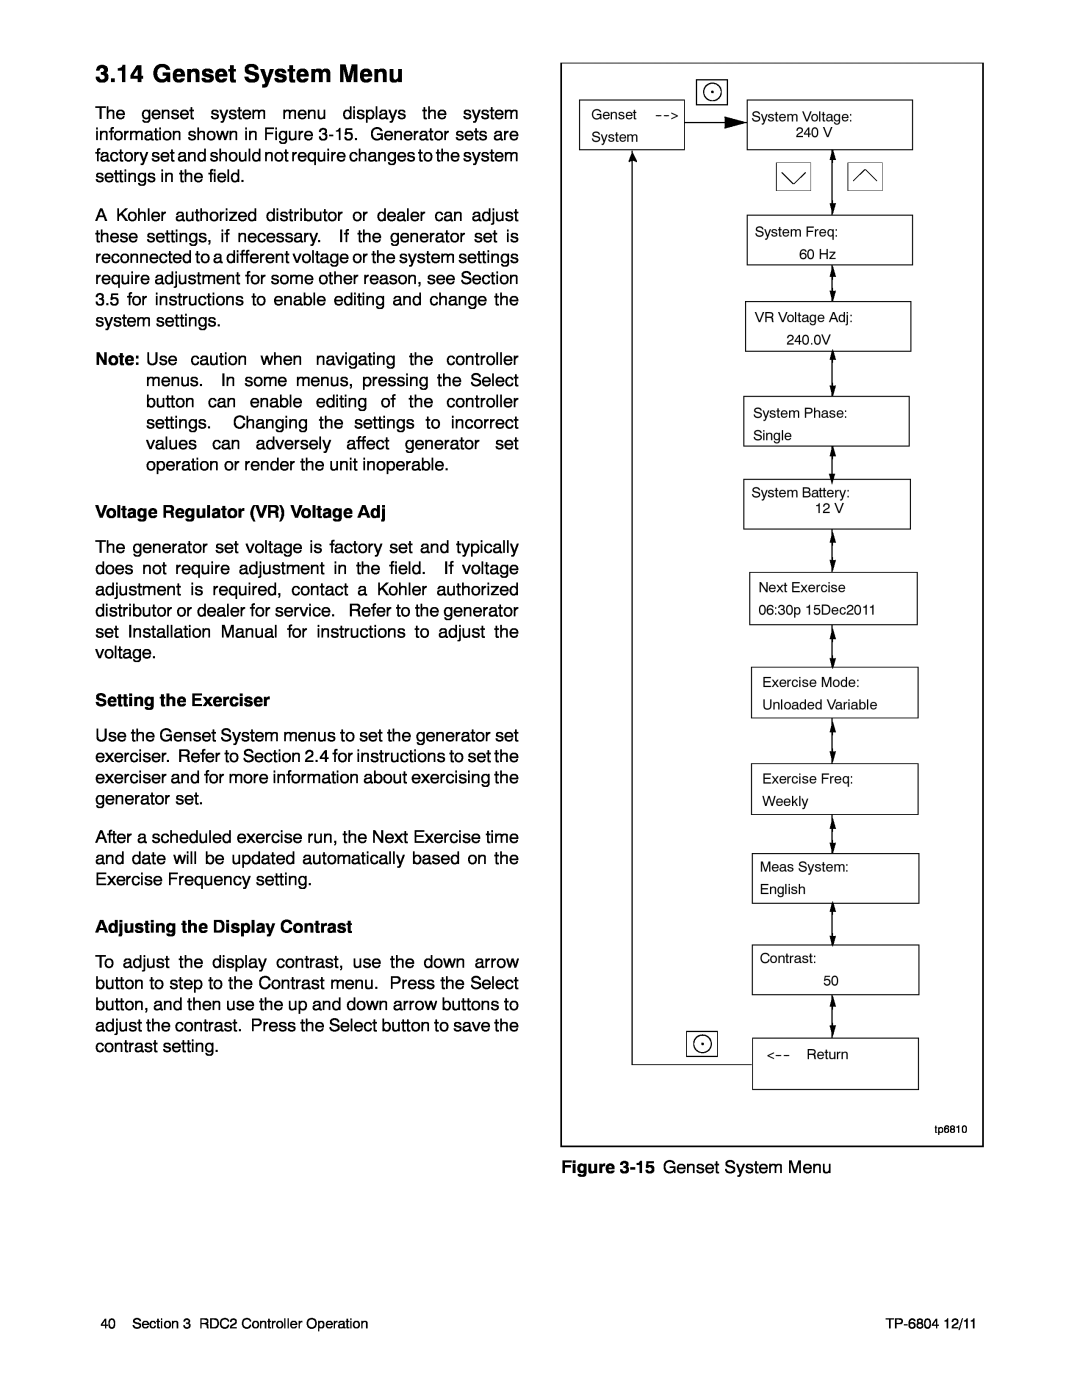 Kohler 14/20RESAL manual Genset System Menu 